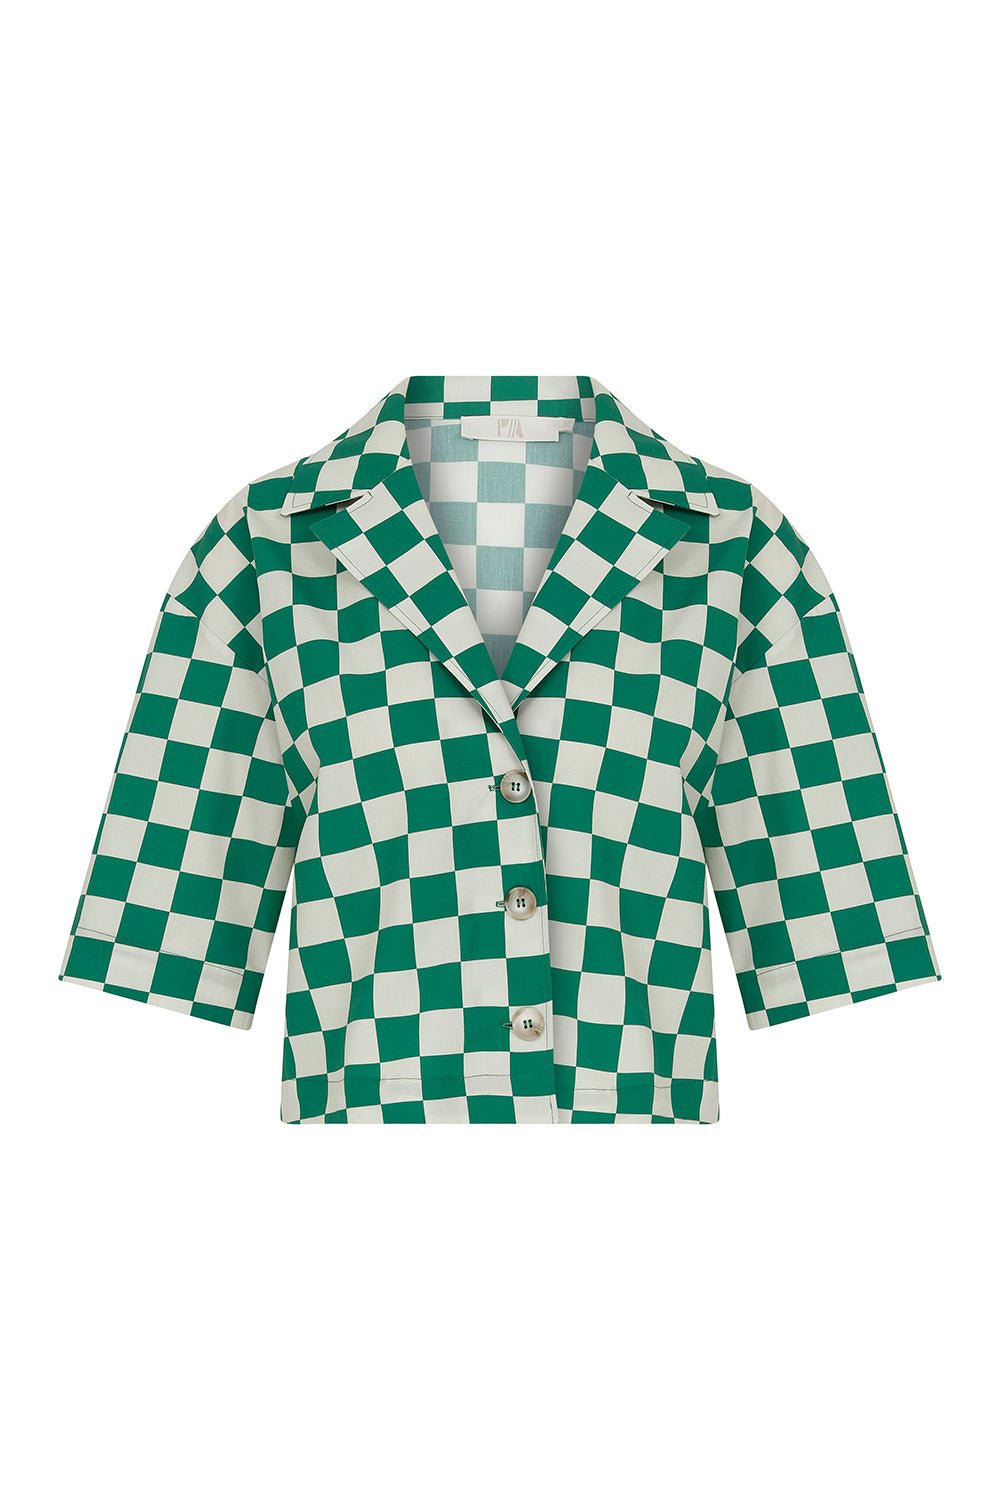 Baila - Cropped Green - Ecru Printed Short Sleeve Shirt